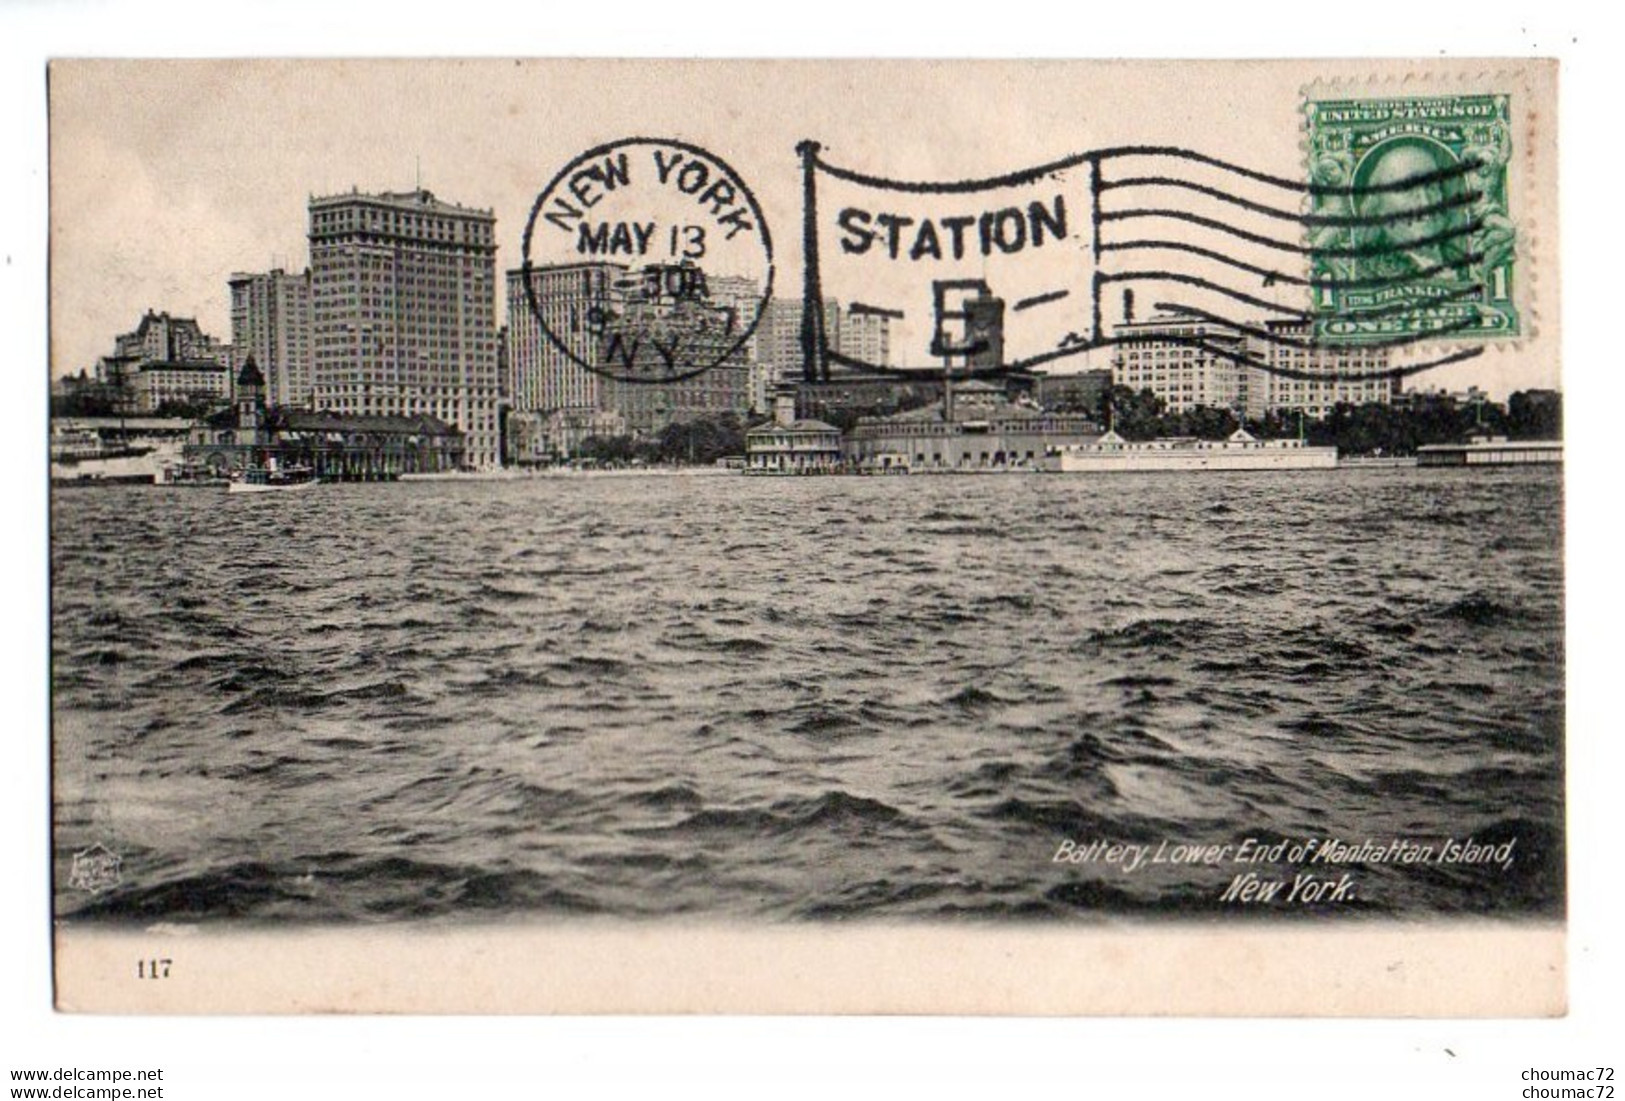 (Etats-Unis) NY 144, New York, Leighton Co 117, Battery Lower End Of Manhattan Island, Dos Non Divisé - Manhattan